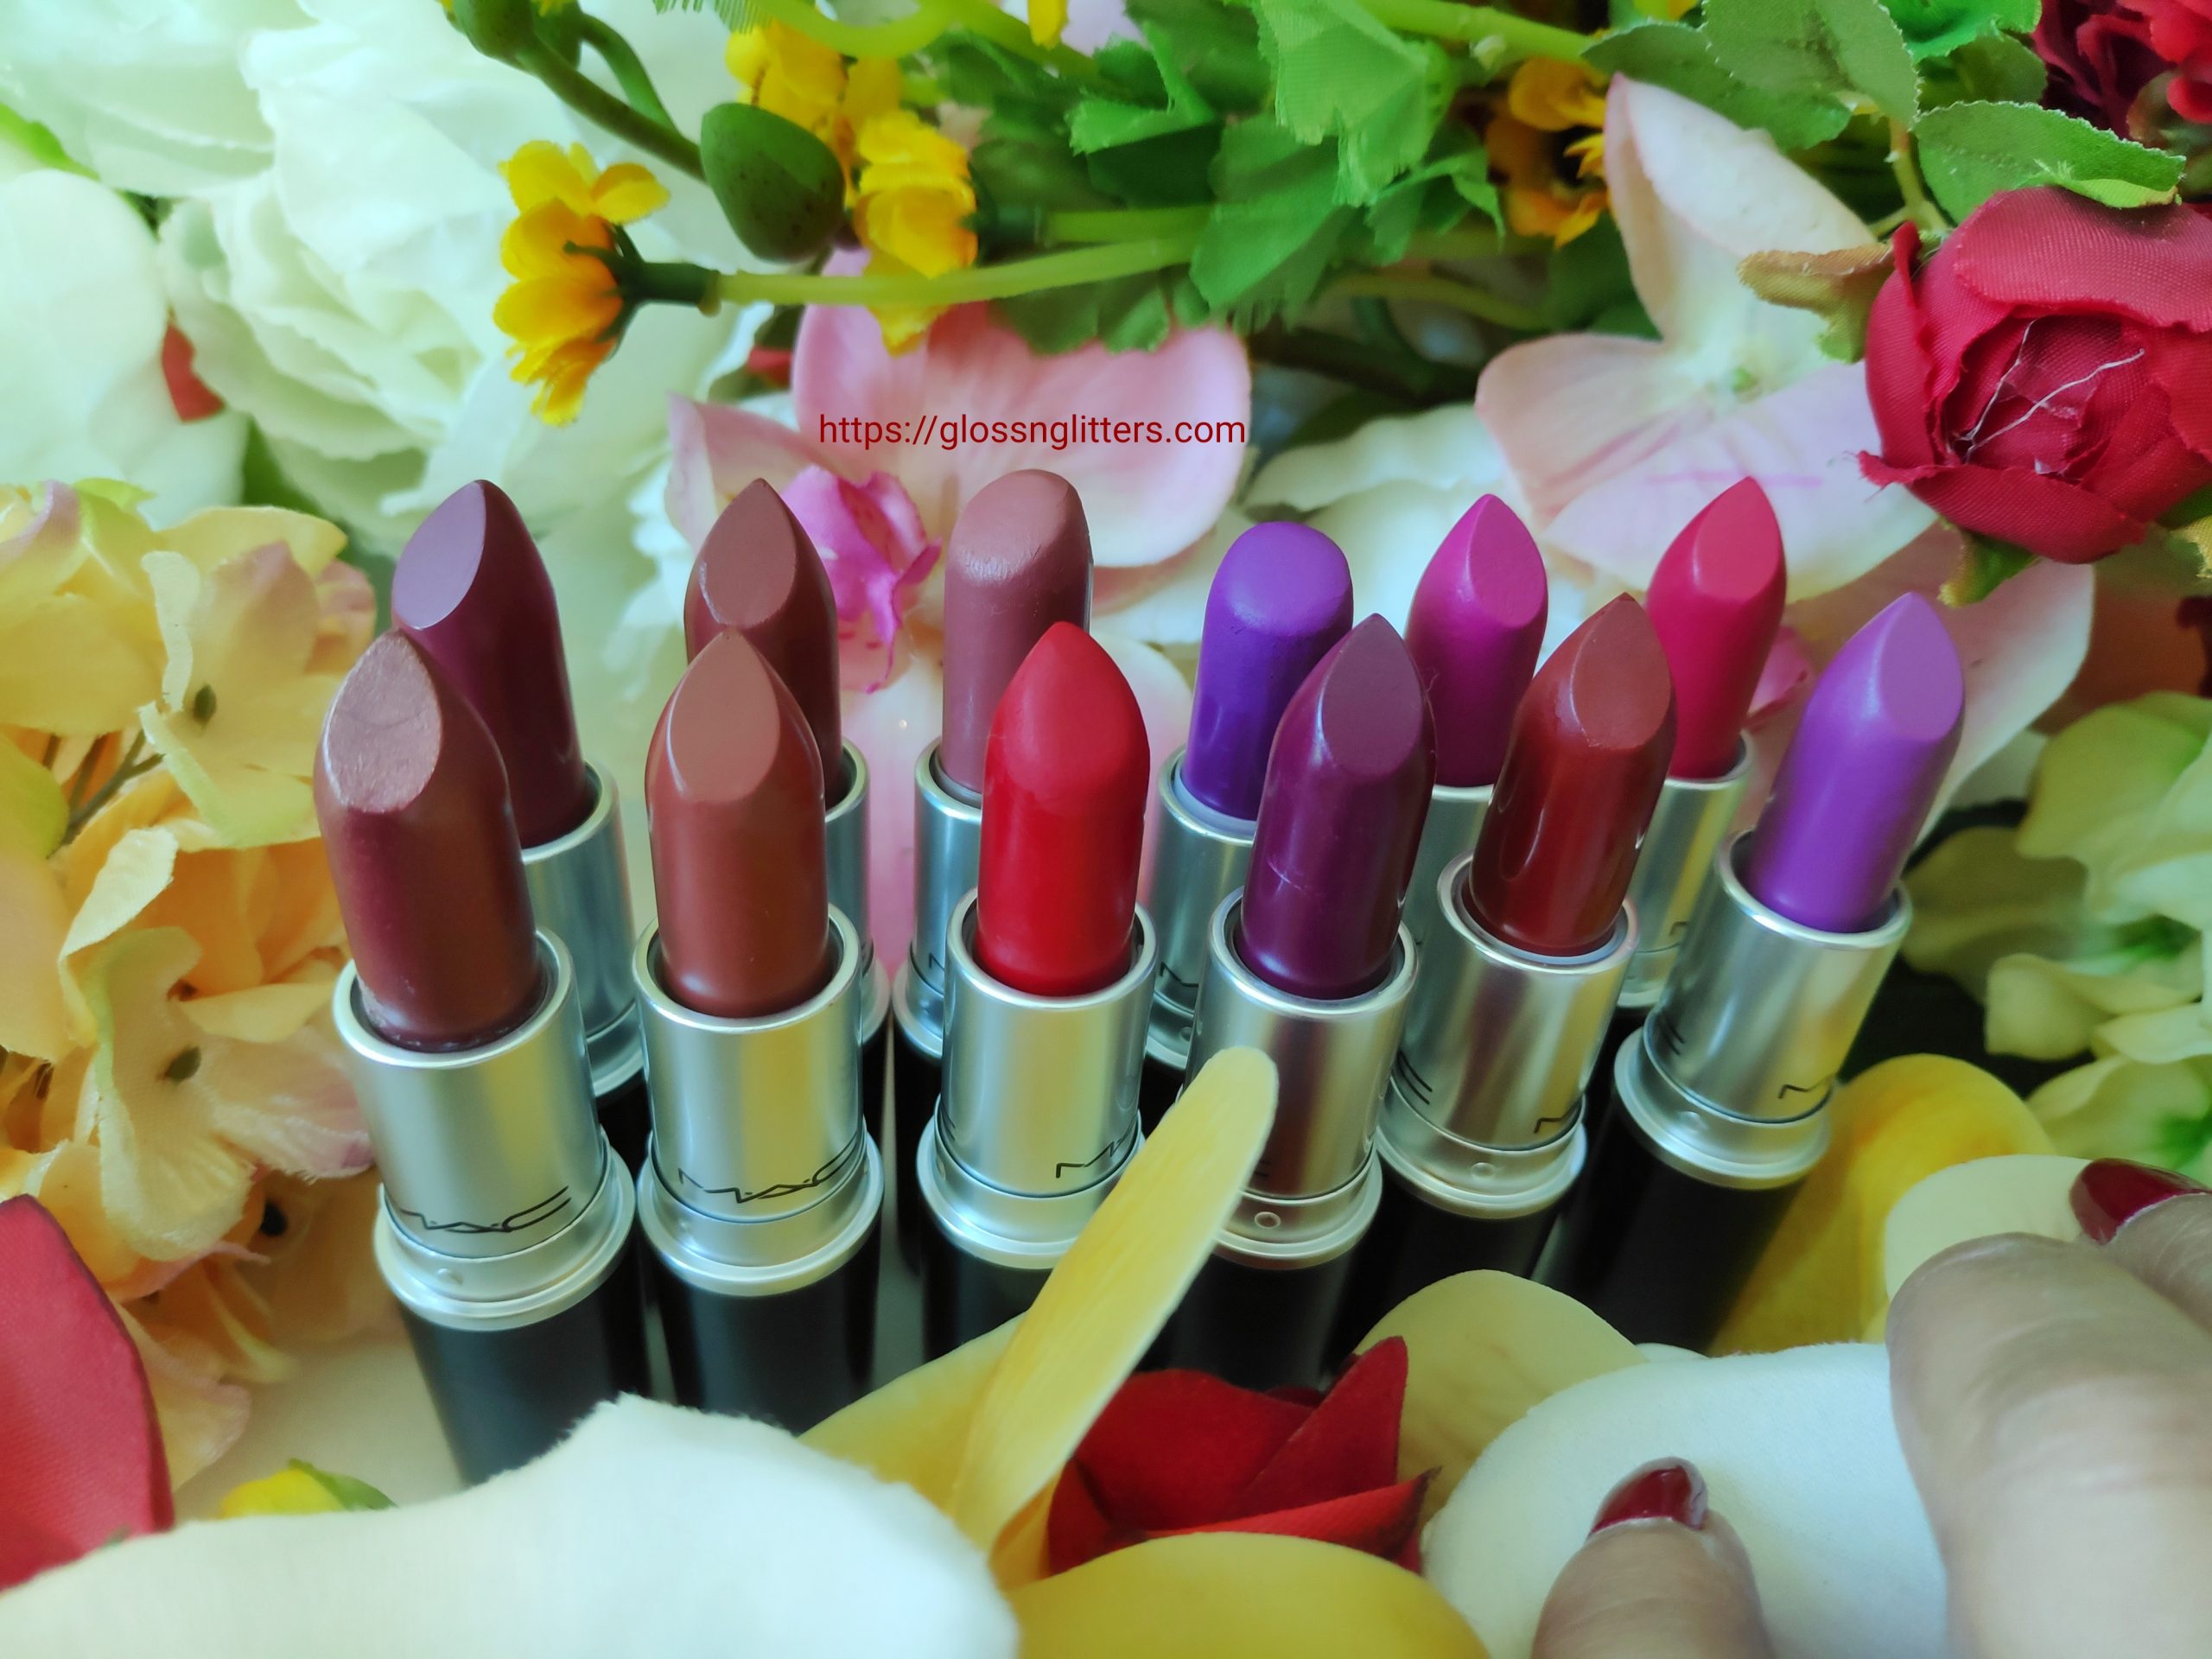 best mac lipstick shades for medium skin